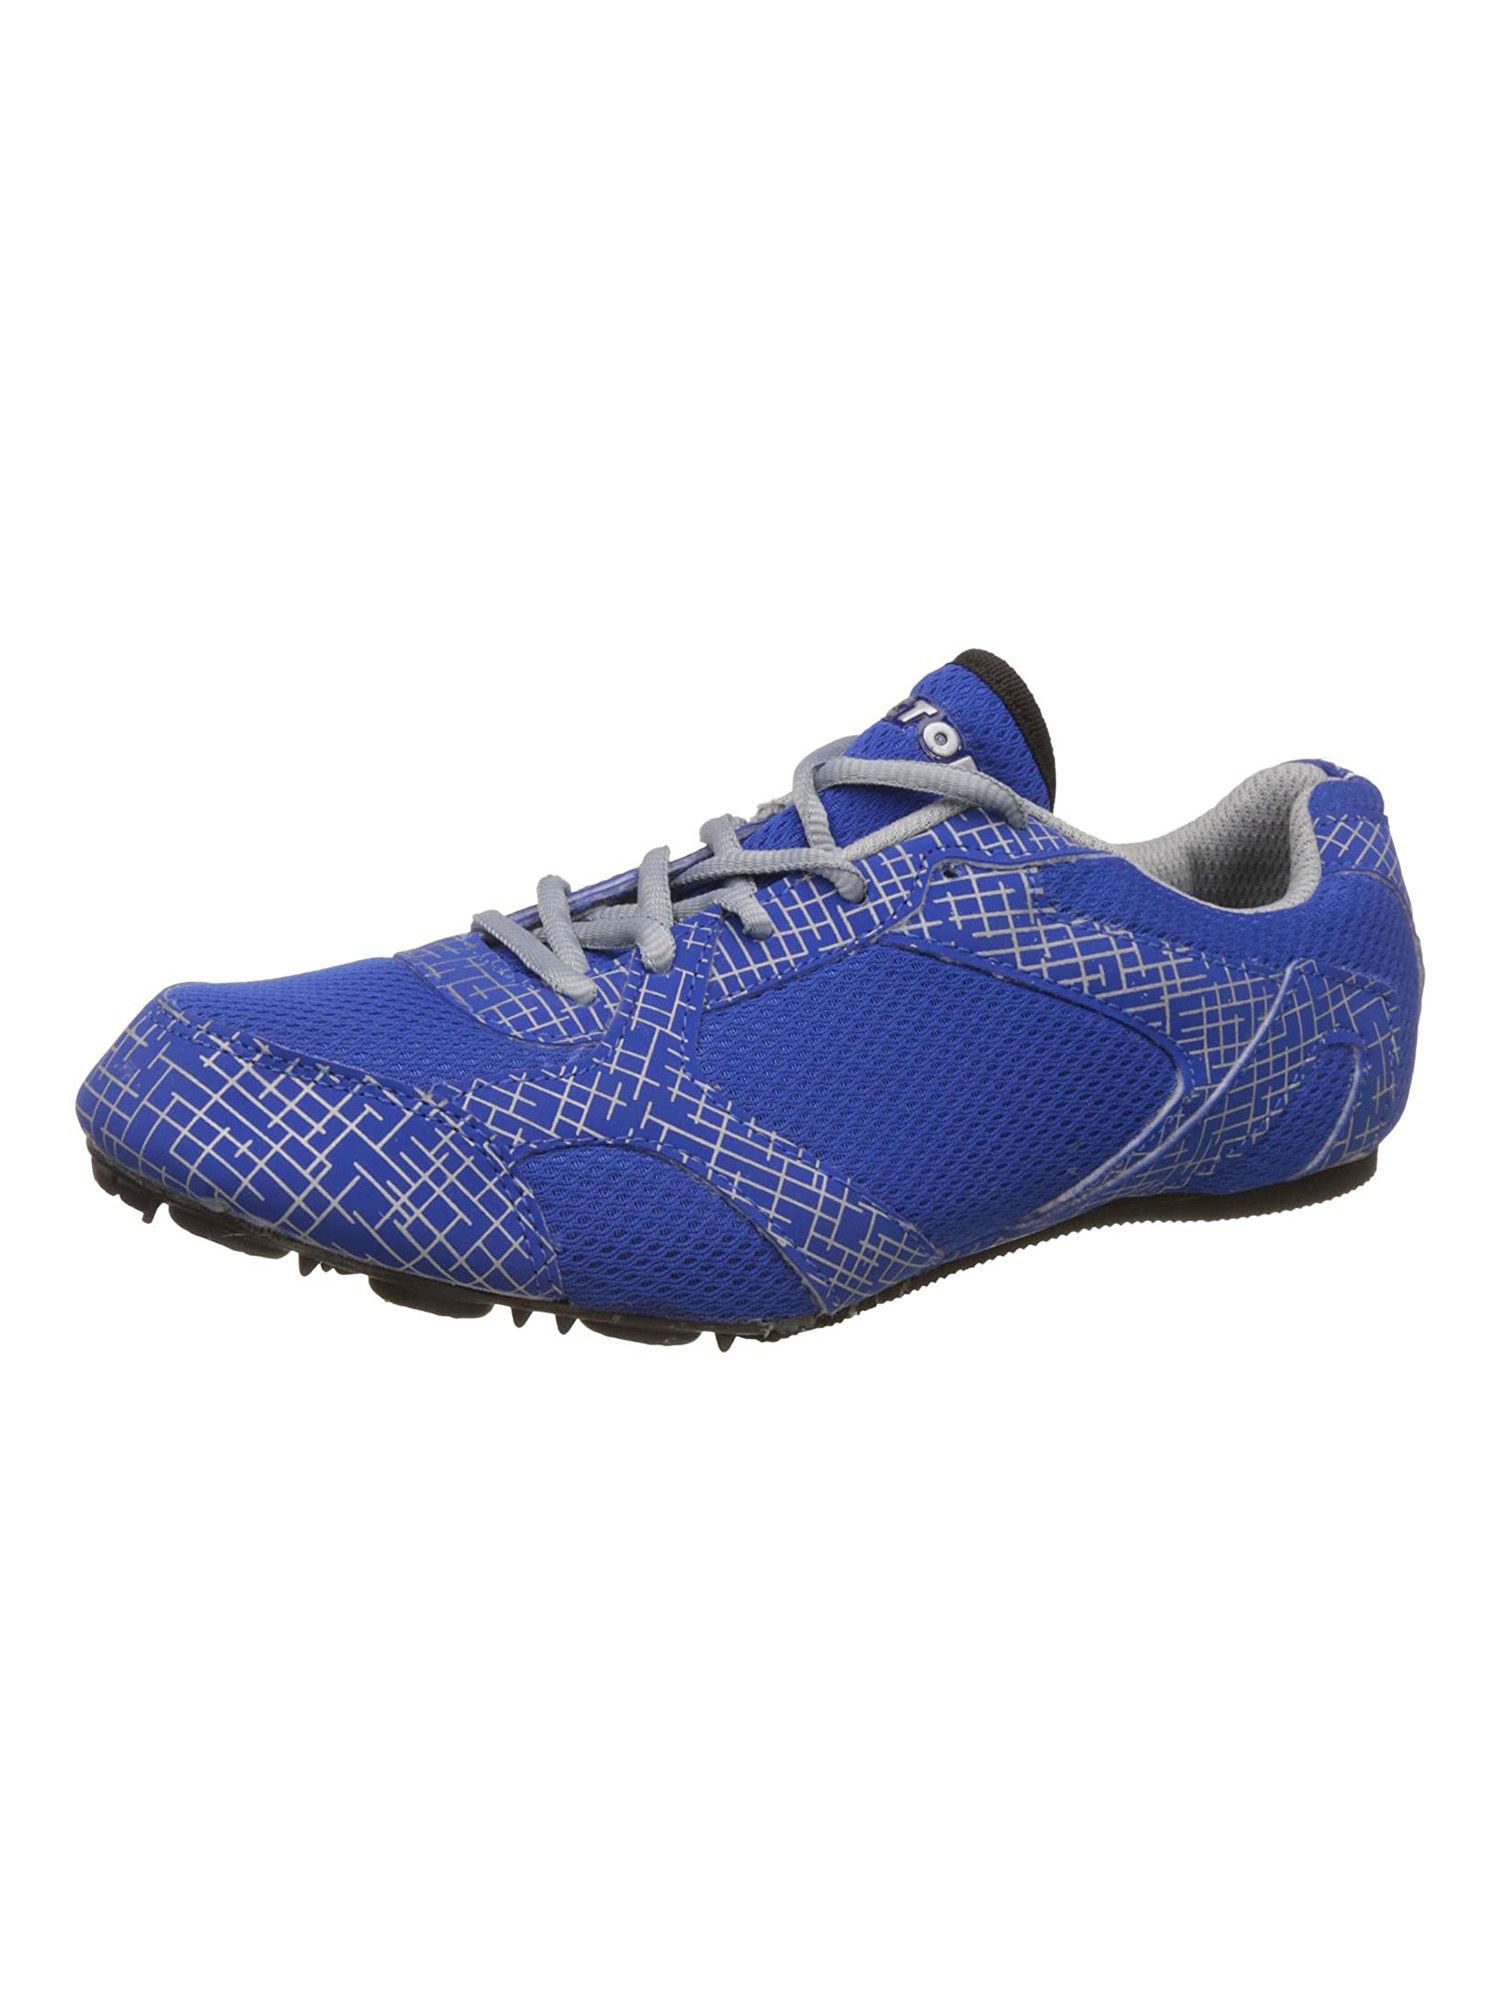 men sprint running shoes for men (blue-grey)